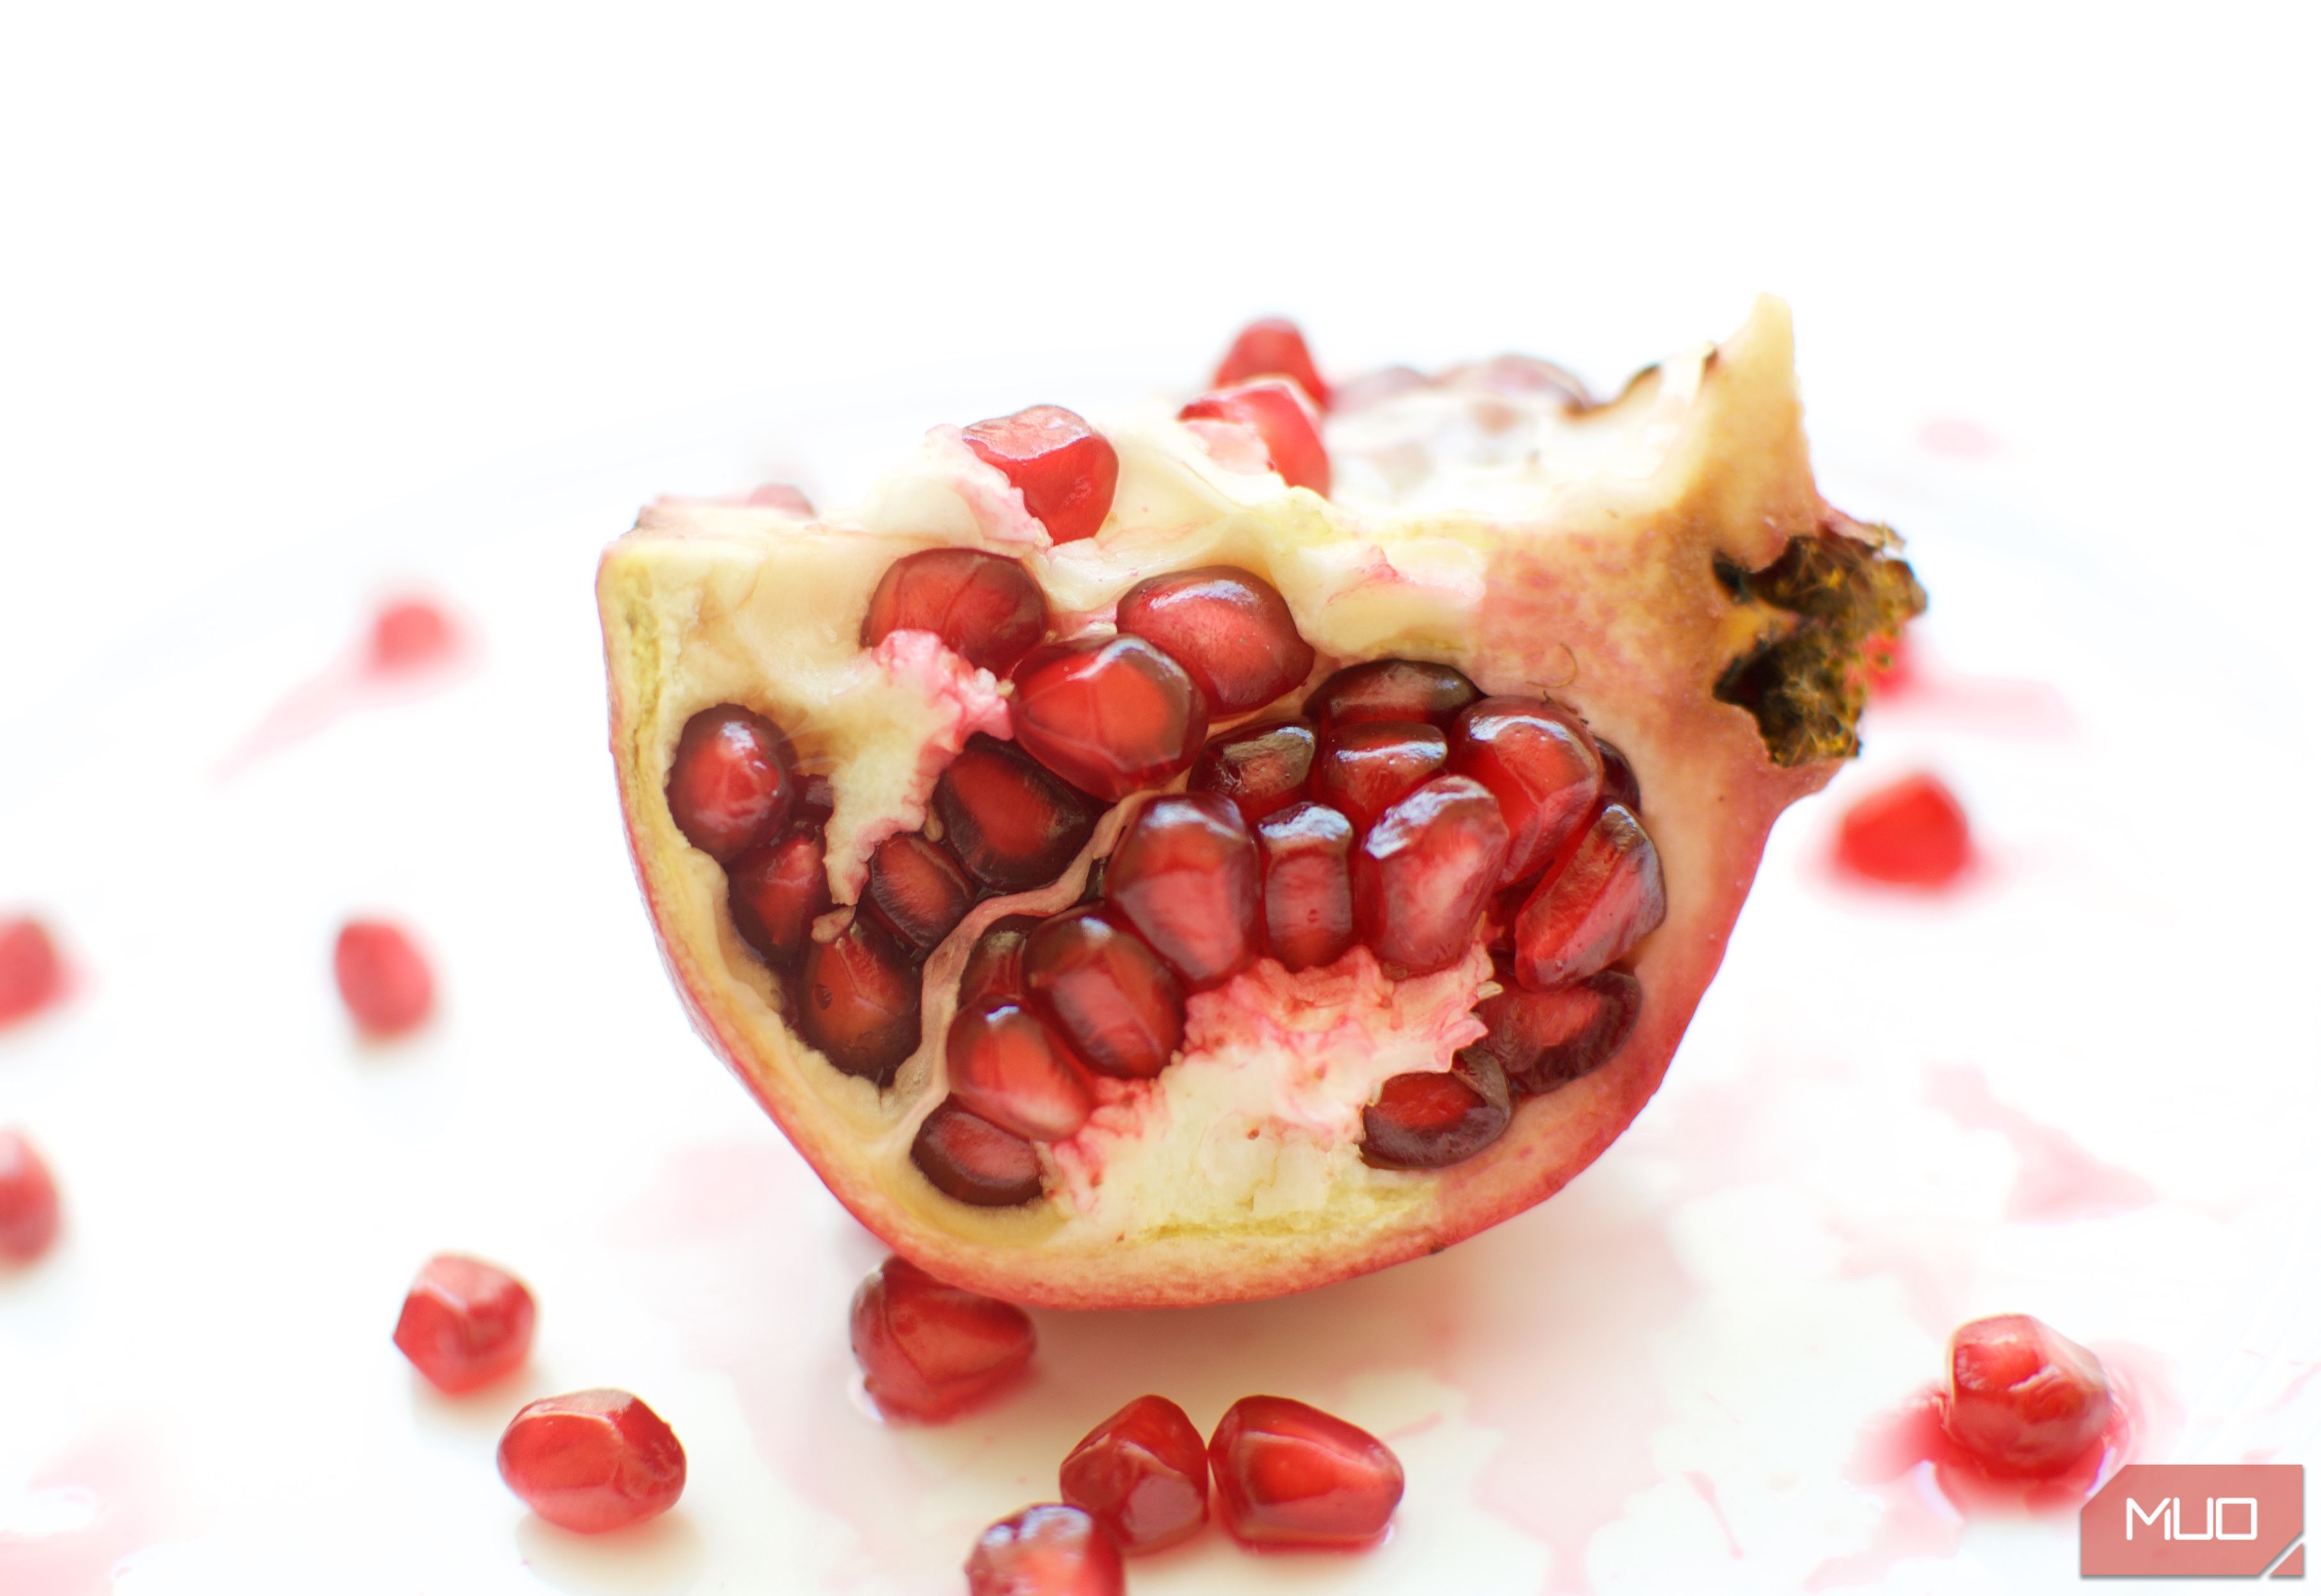 Pomegranate closeup